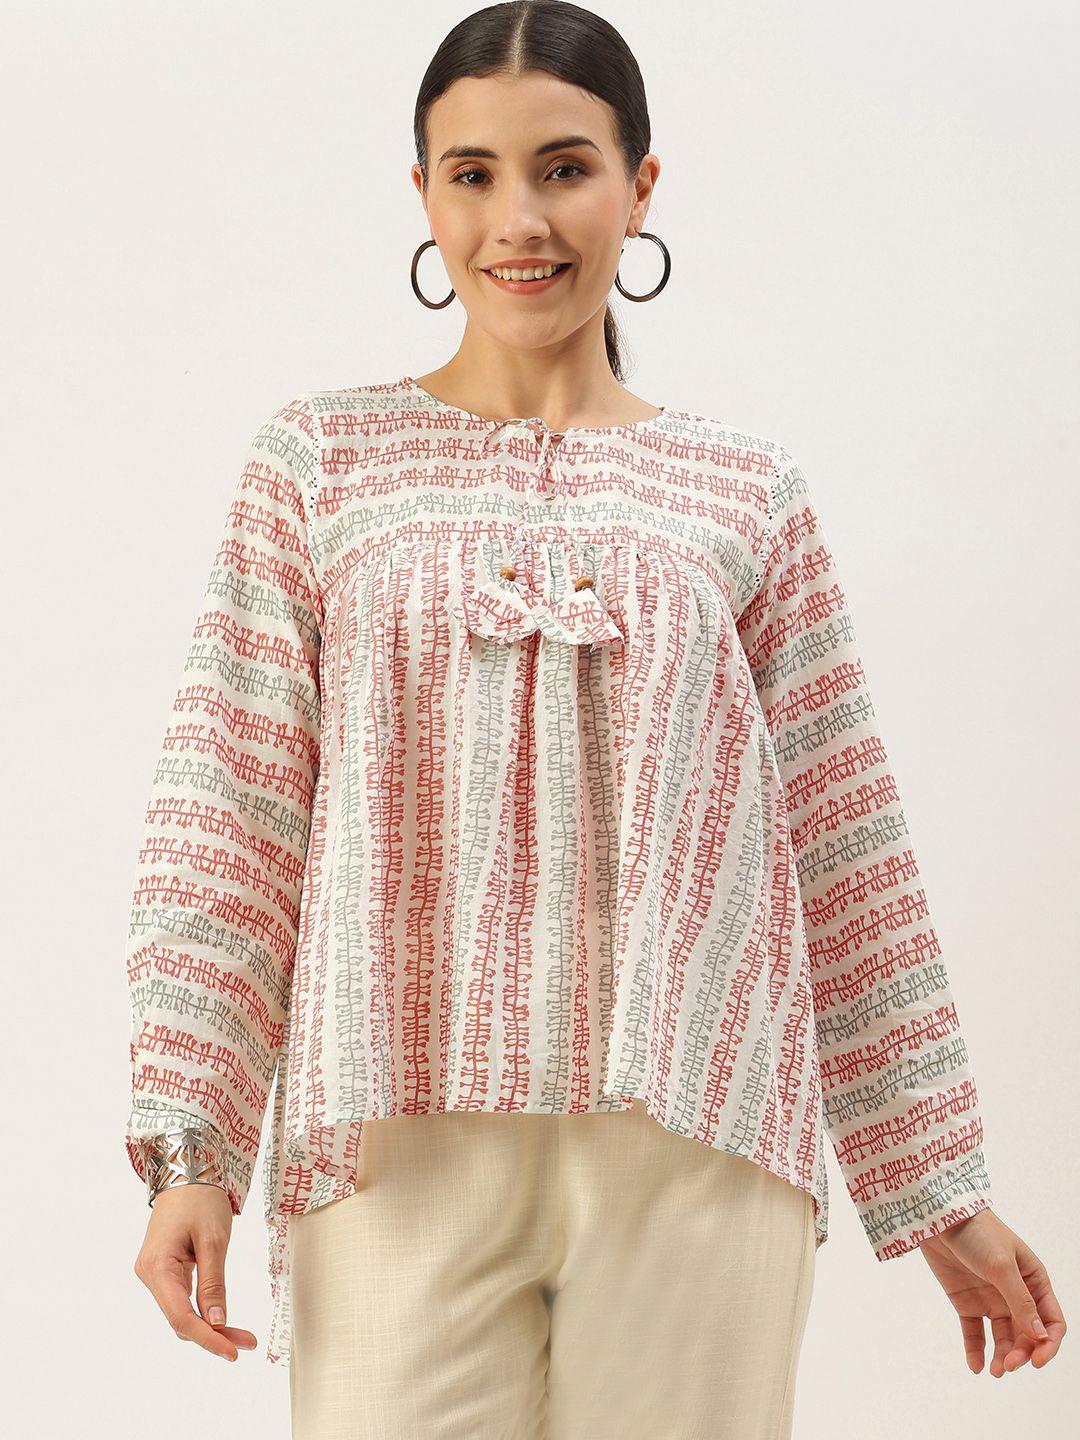 saanjh-white-&-pink-striped-tunic